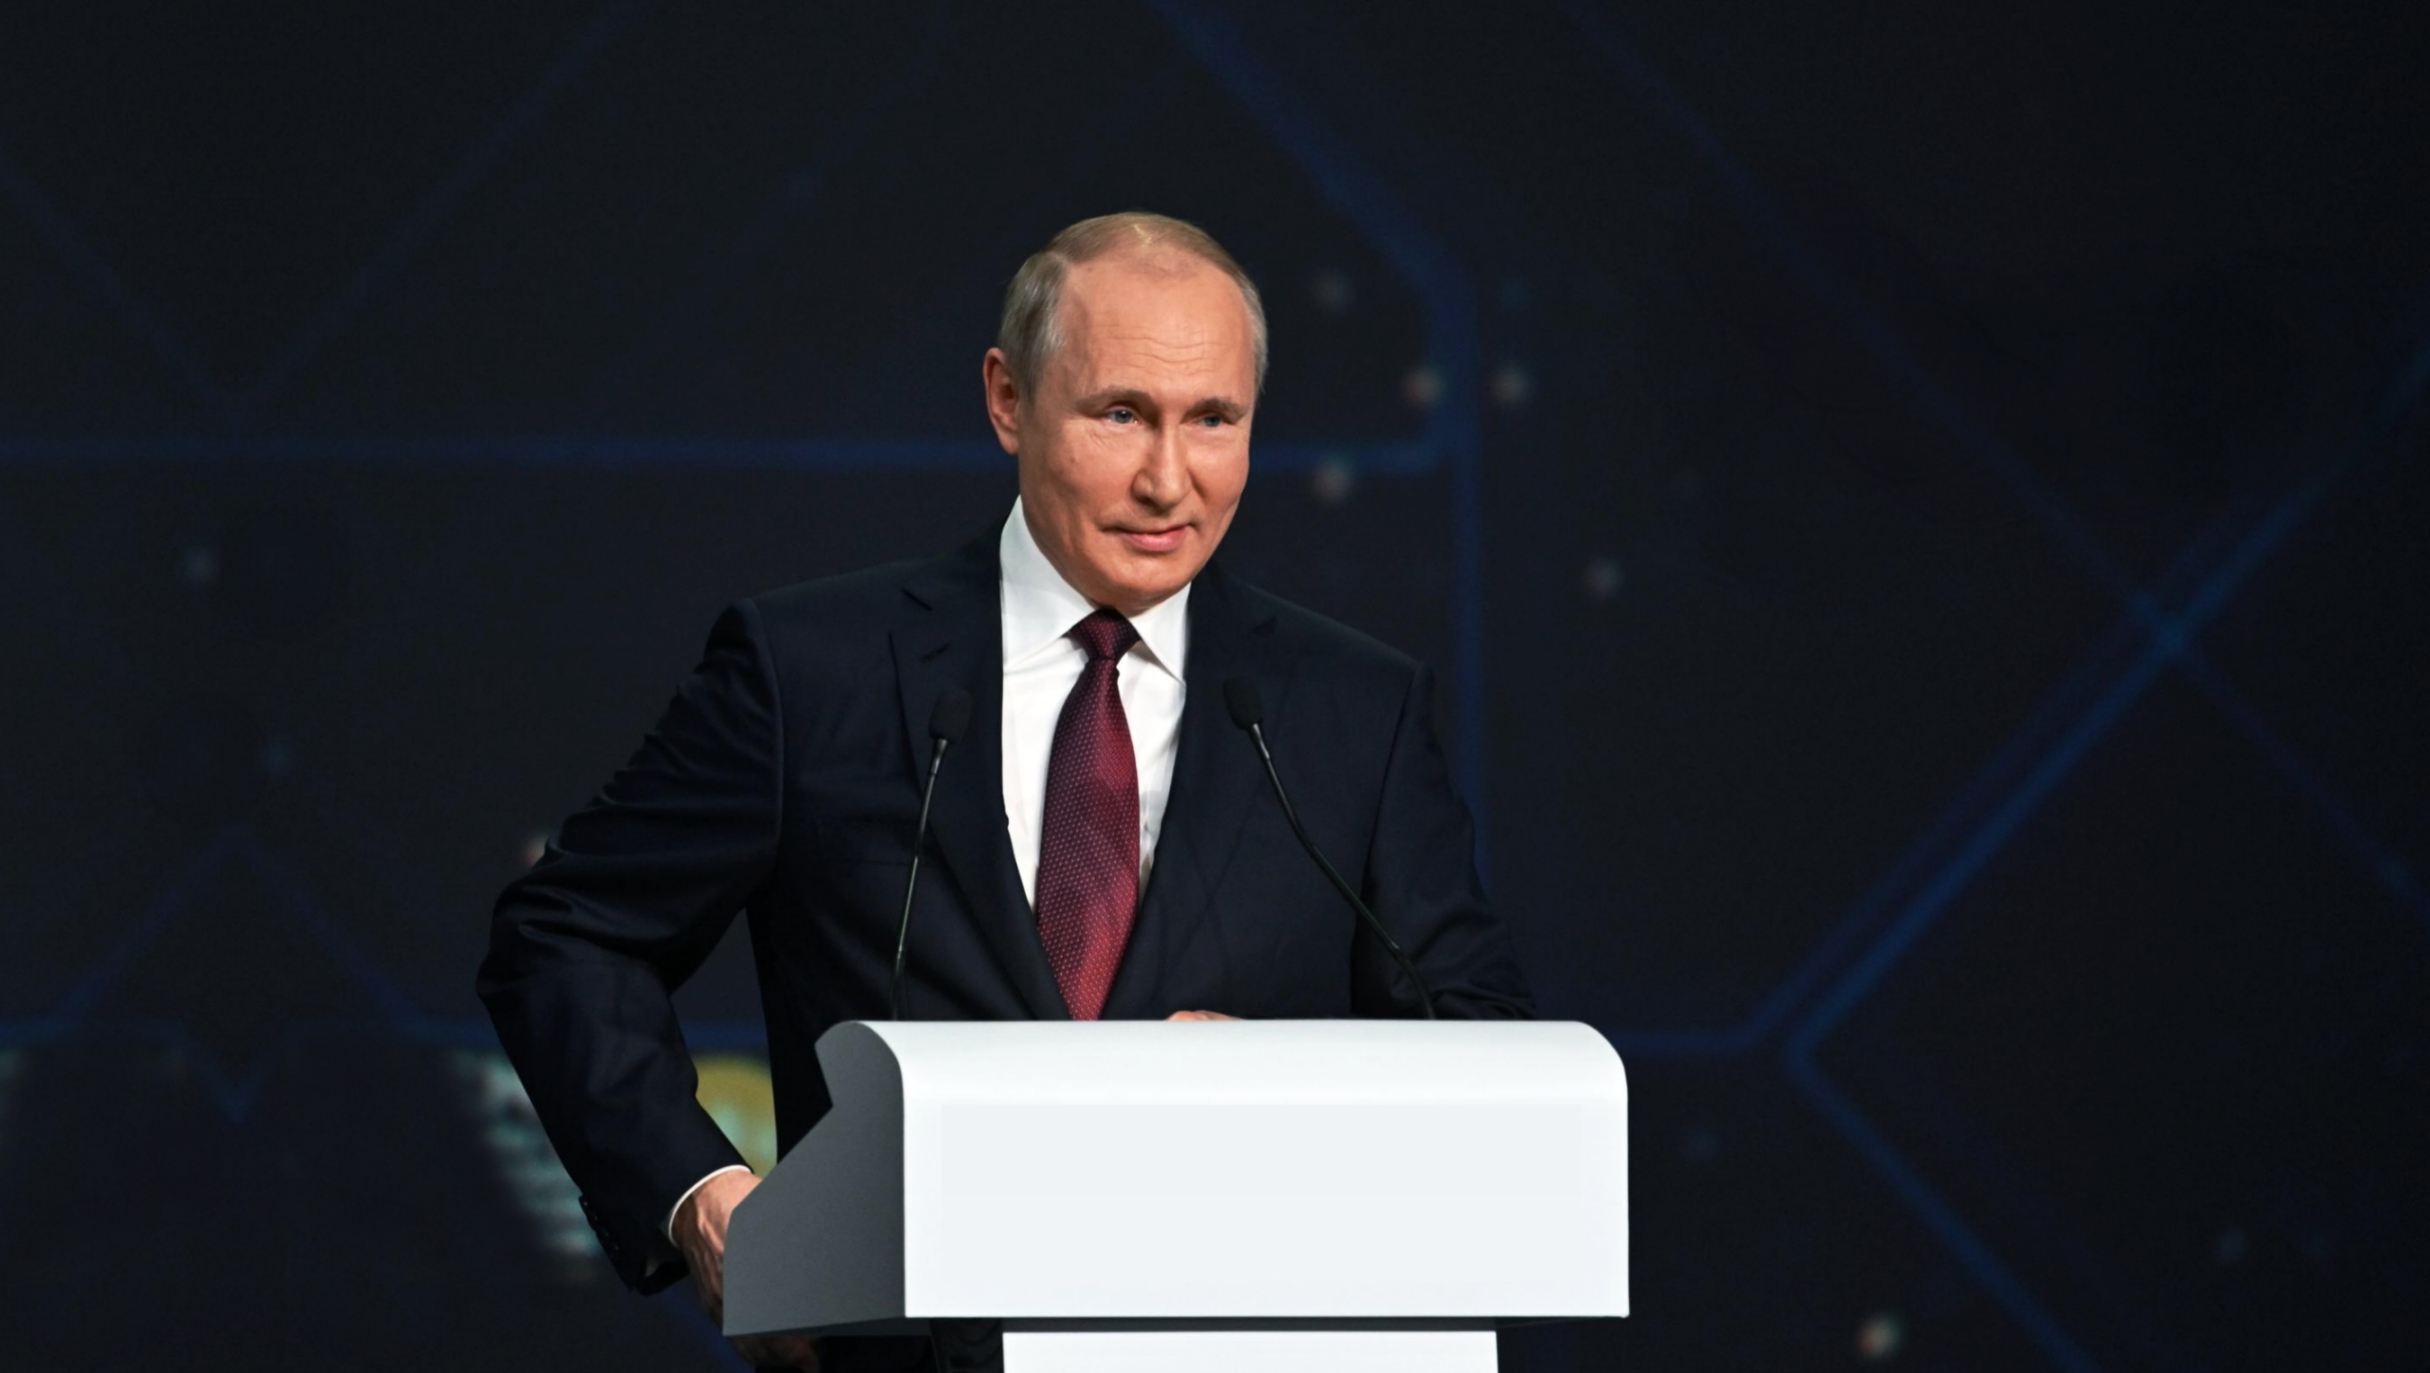 Vladimir Putin Holding a Speech